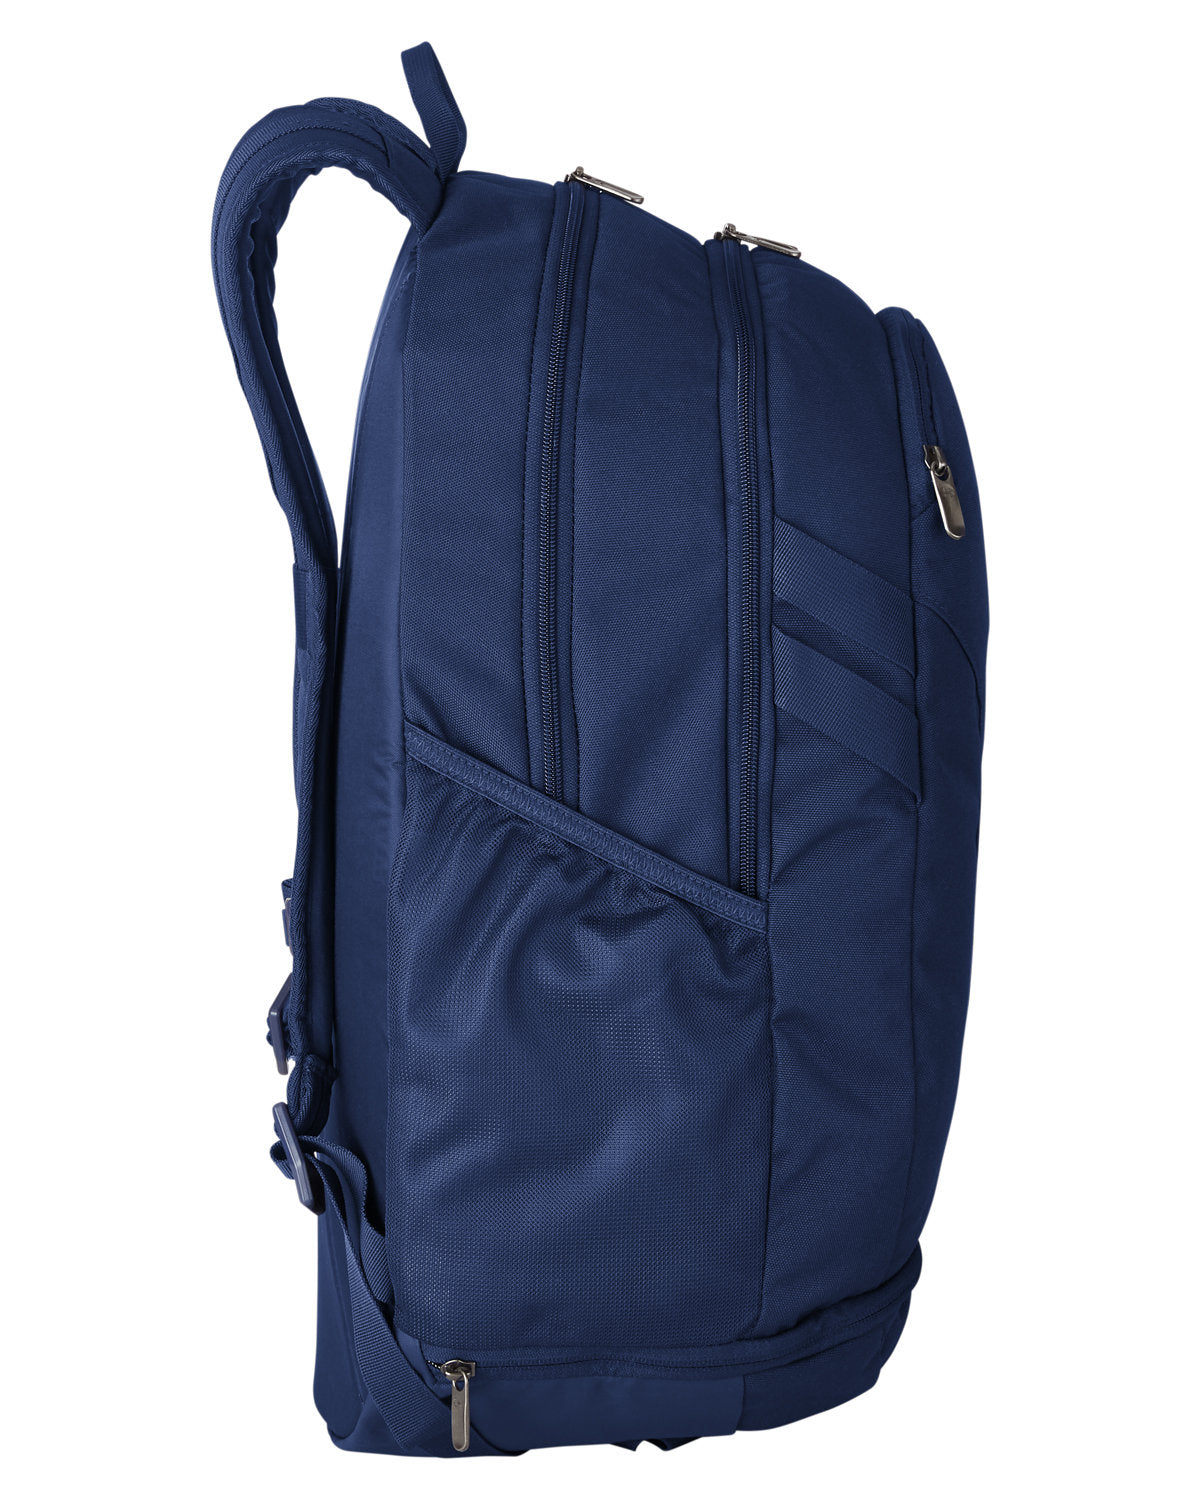 Under Armour Hustle Customized Backpacks, Mid Navy